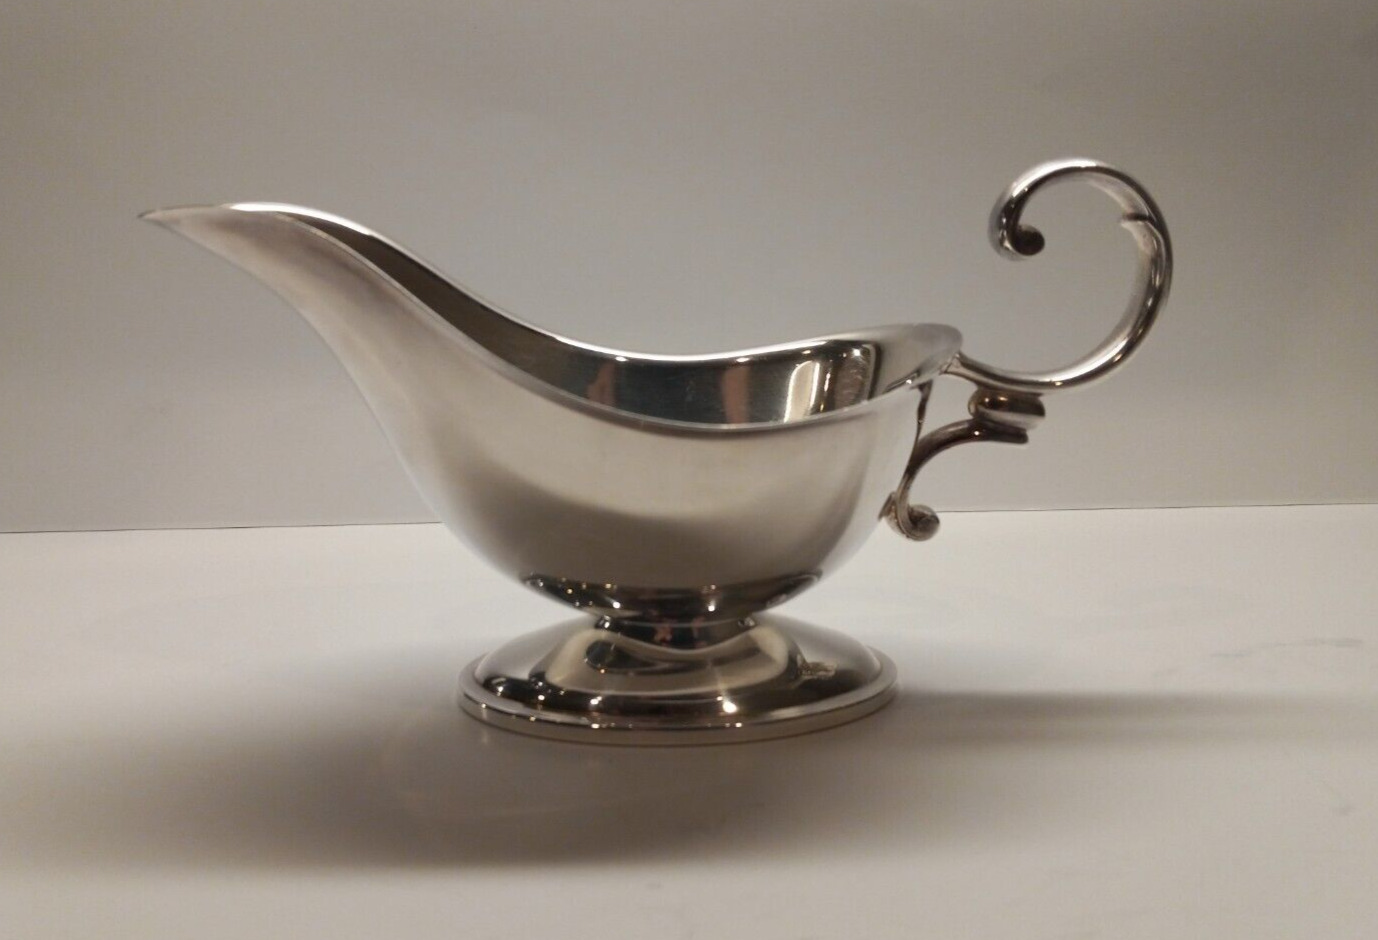 Elegant Scorpion Minimalist Silver Plated Gravy Boat, Bowl, or Display Piece